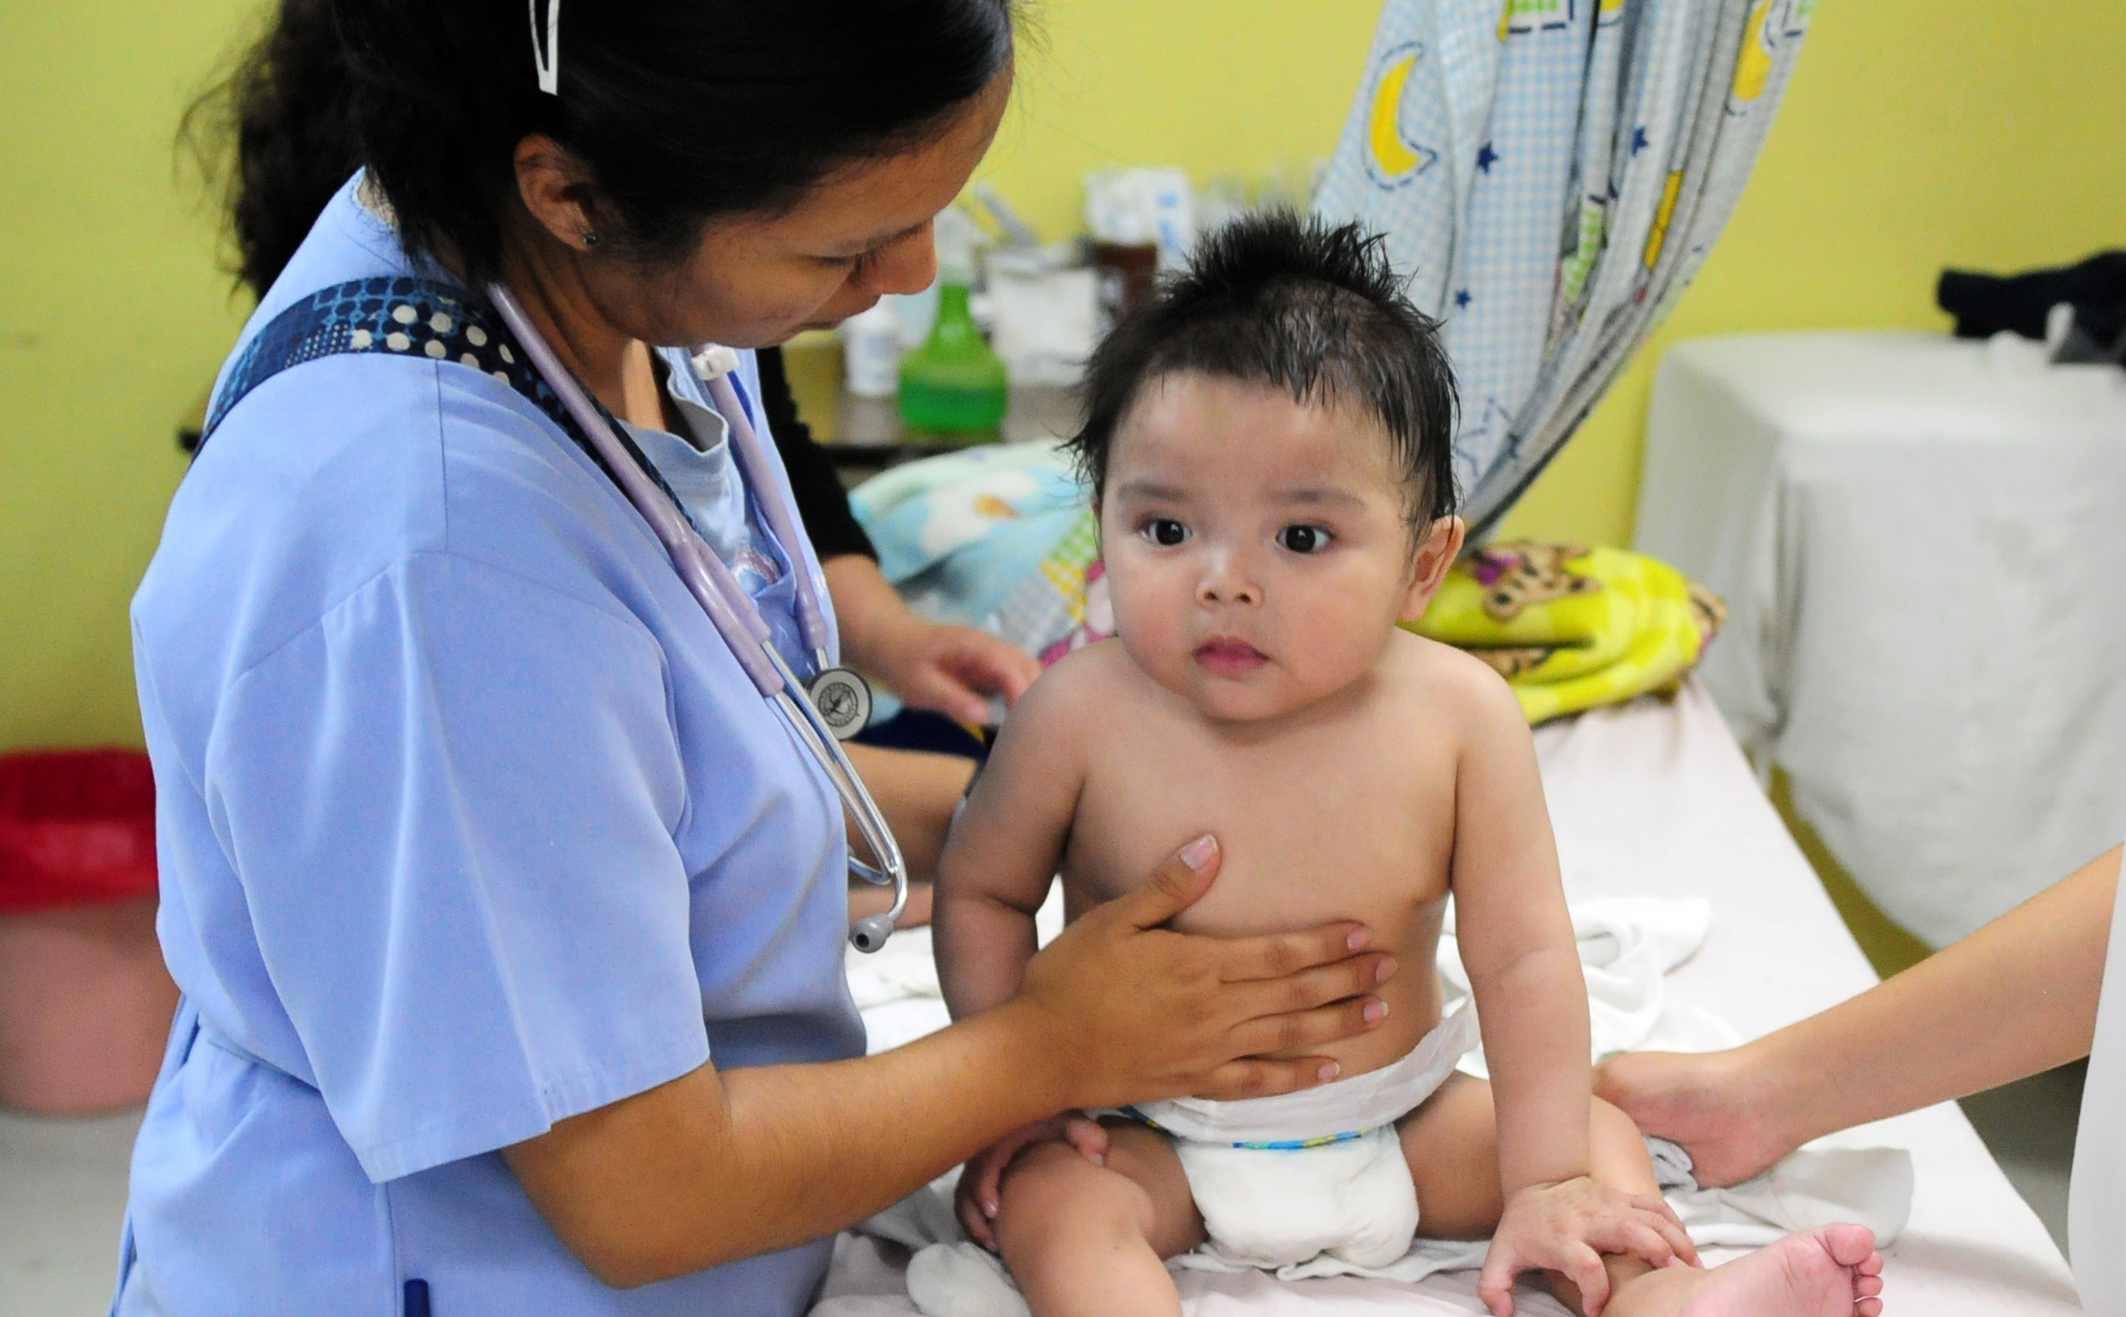 Guatemala doctor examines infant